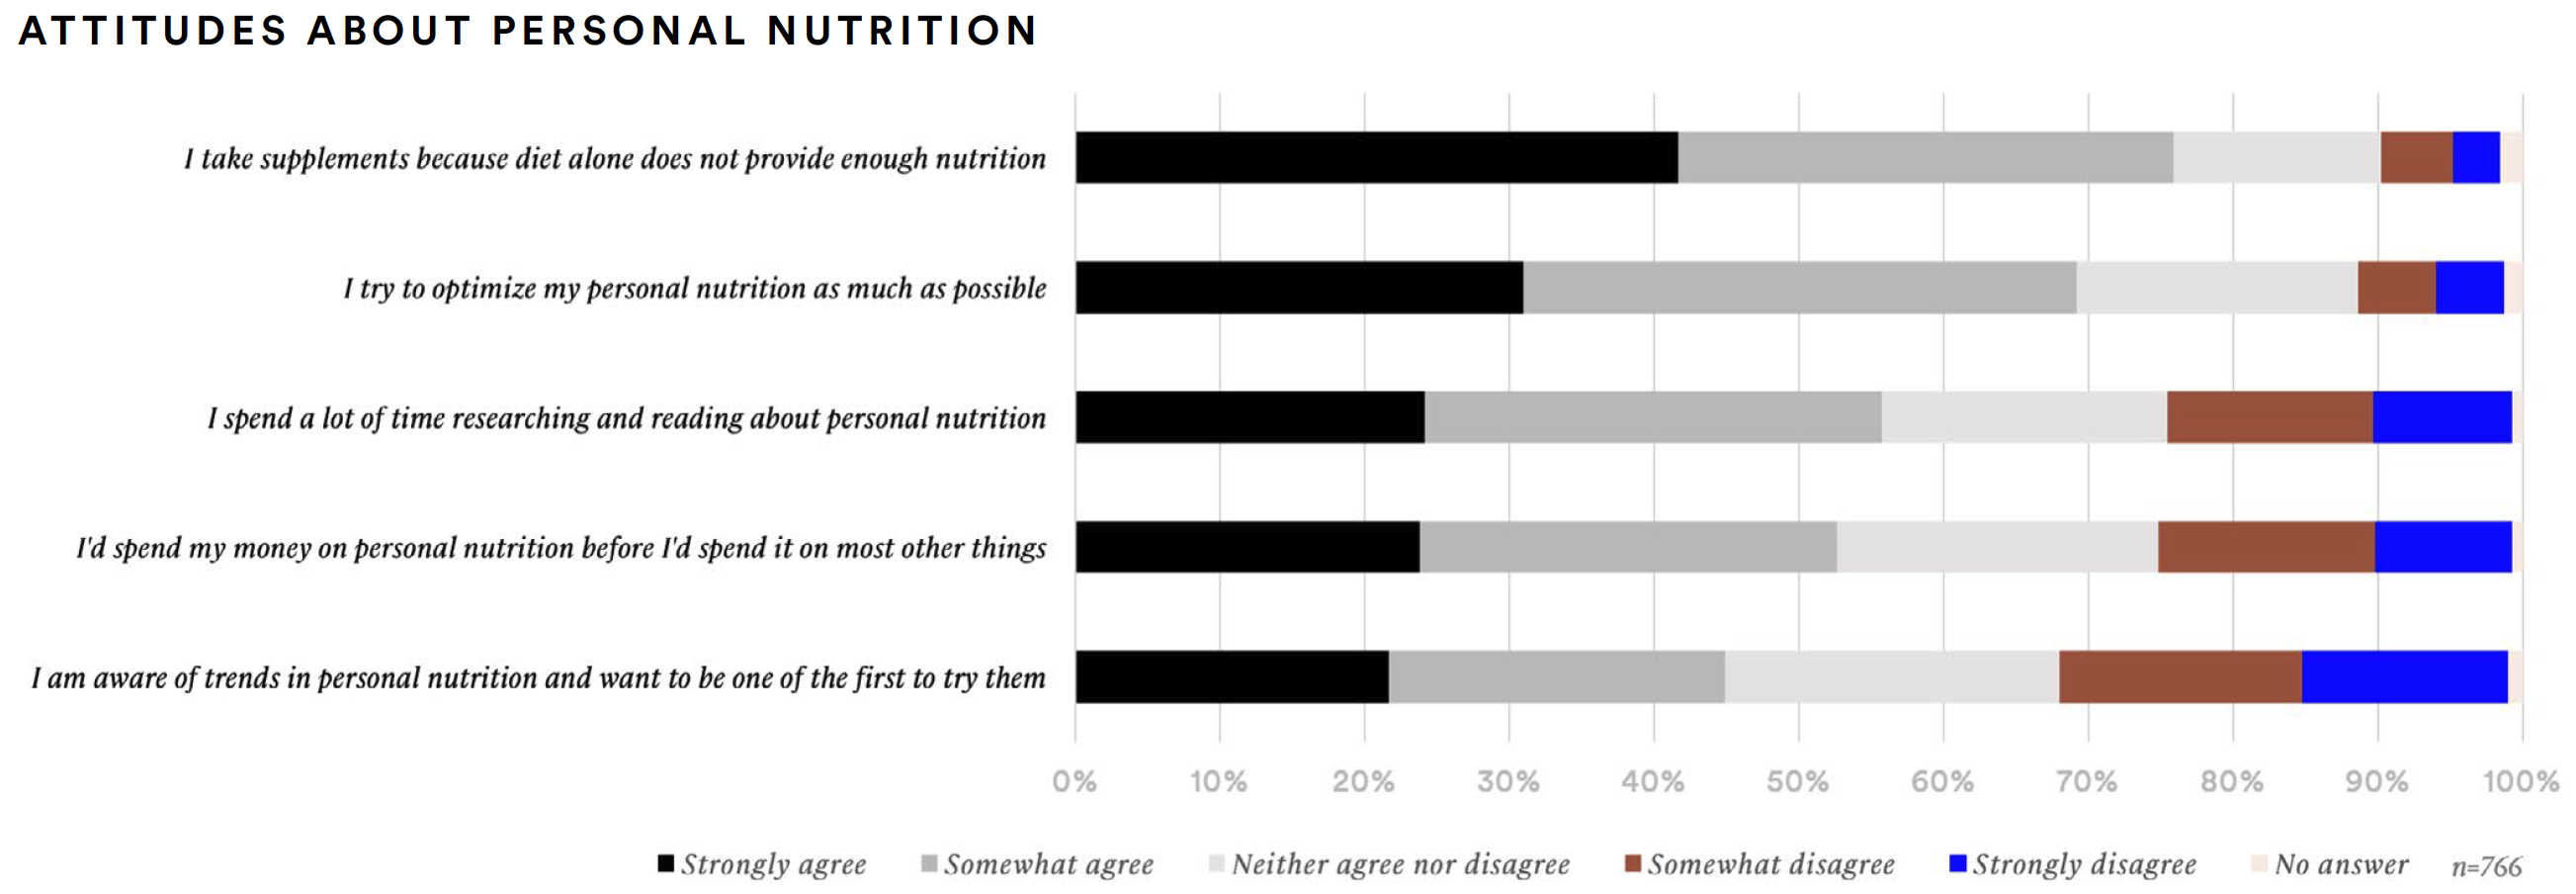 attitudes about personal nutrition graph